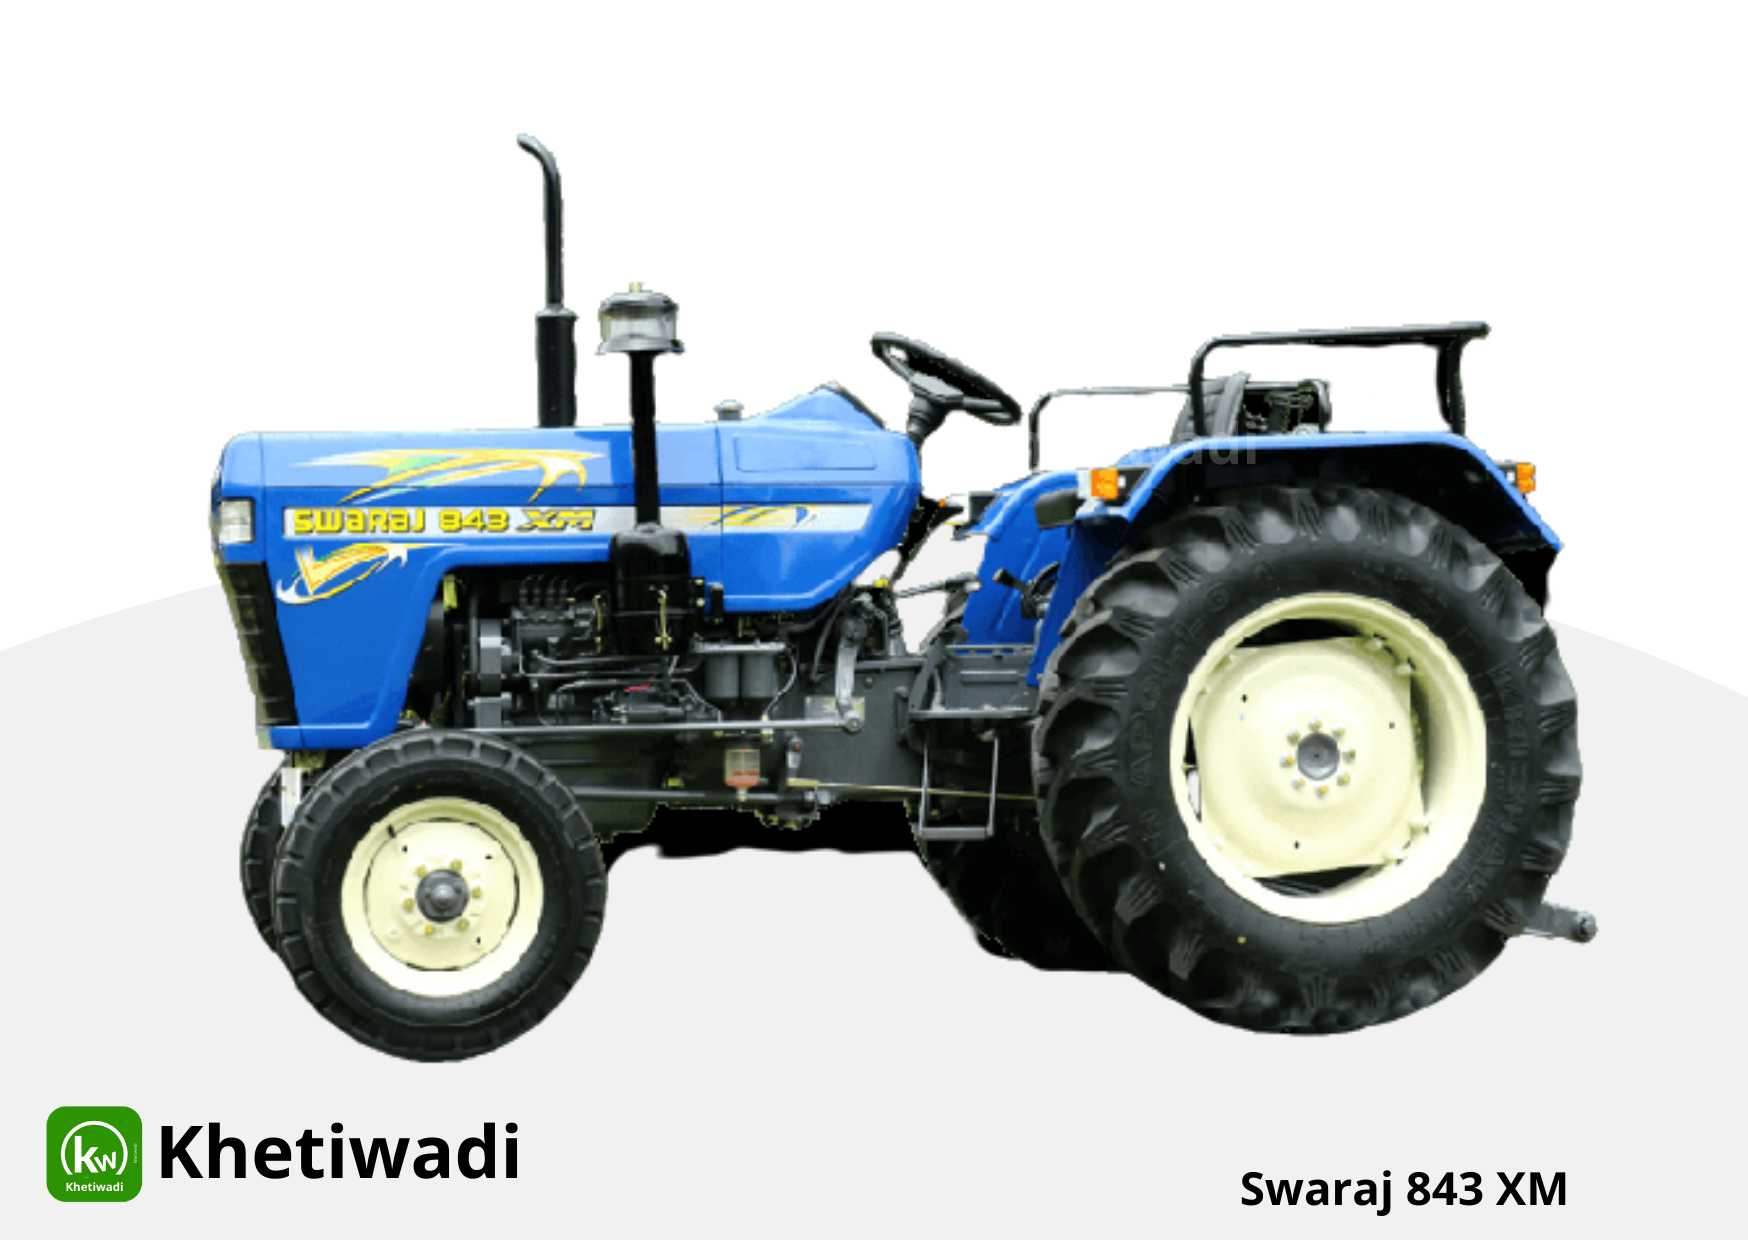 Swaraj 843 XM full detail